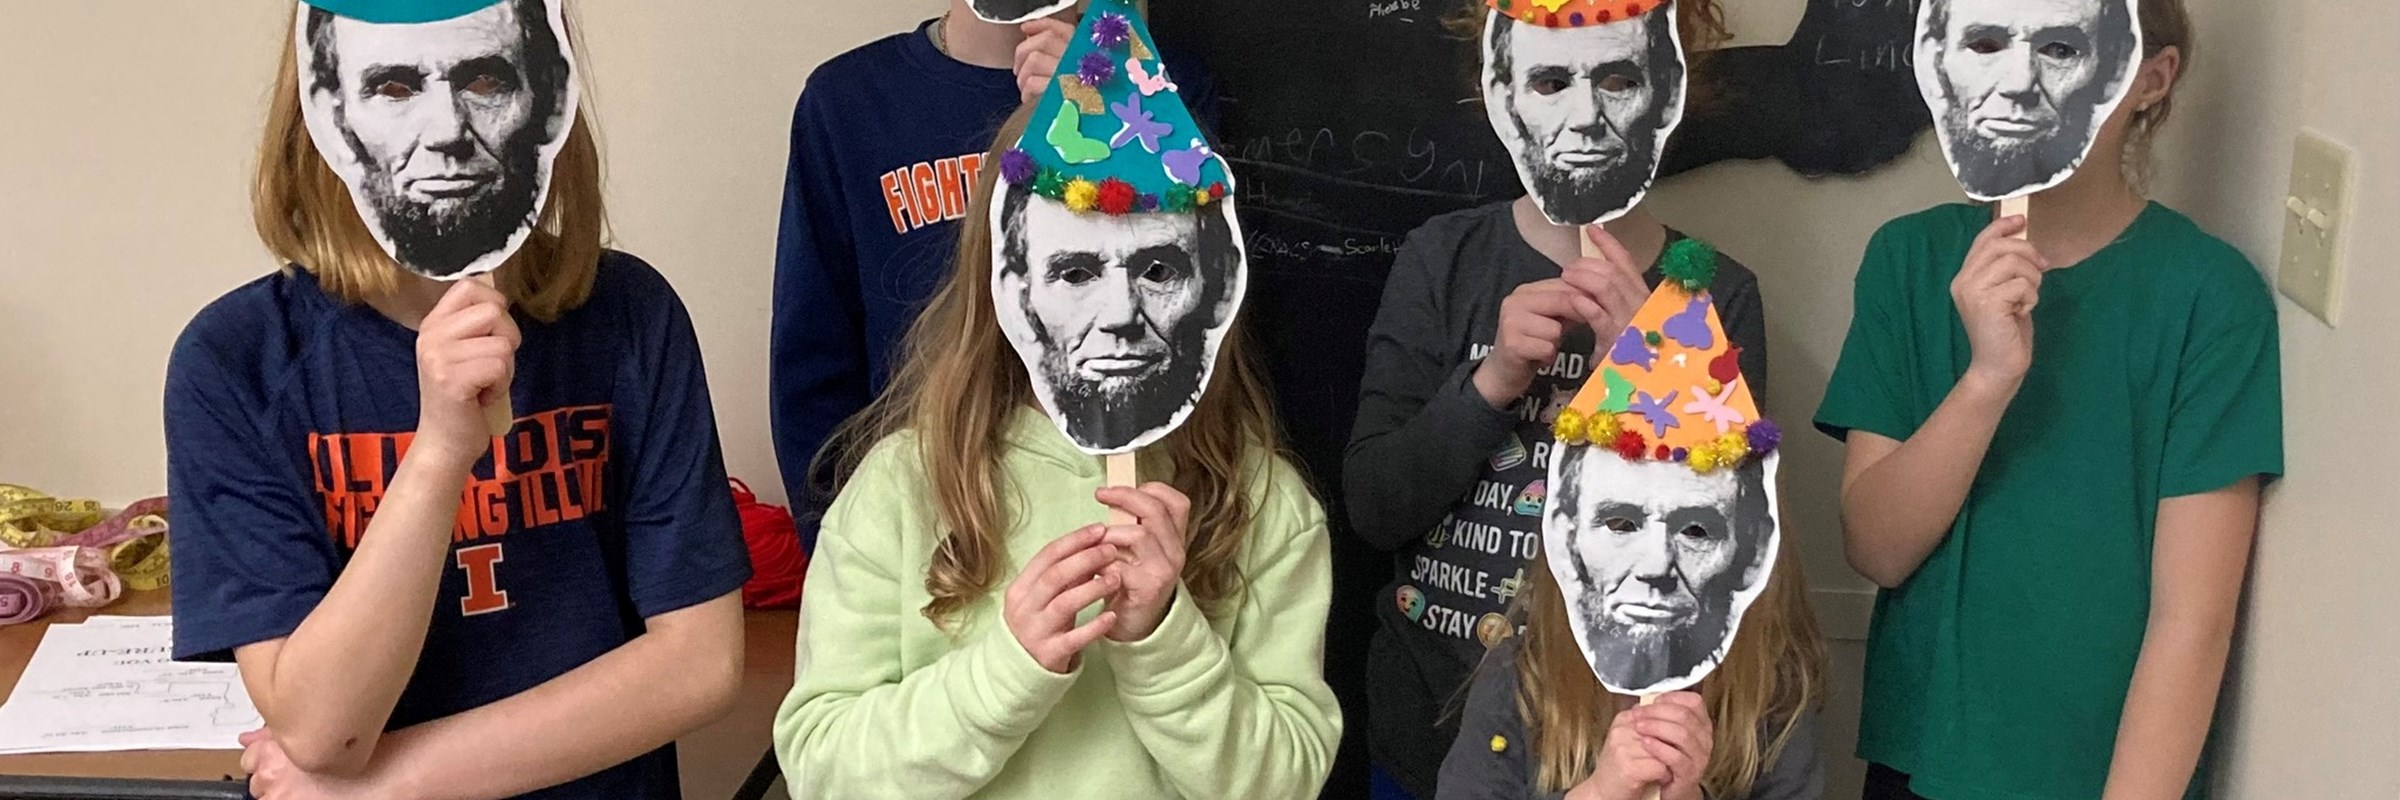 Abe Lincoln's Birthday